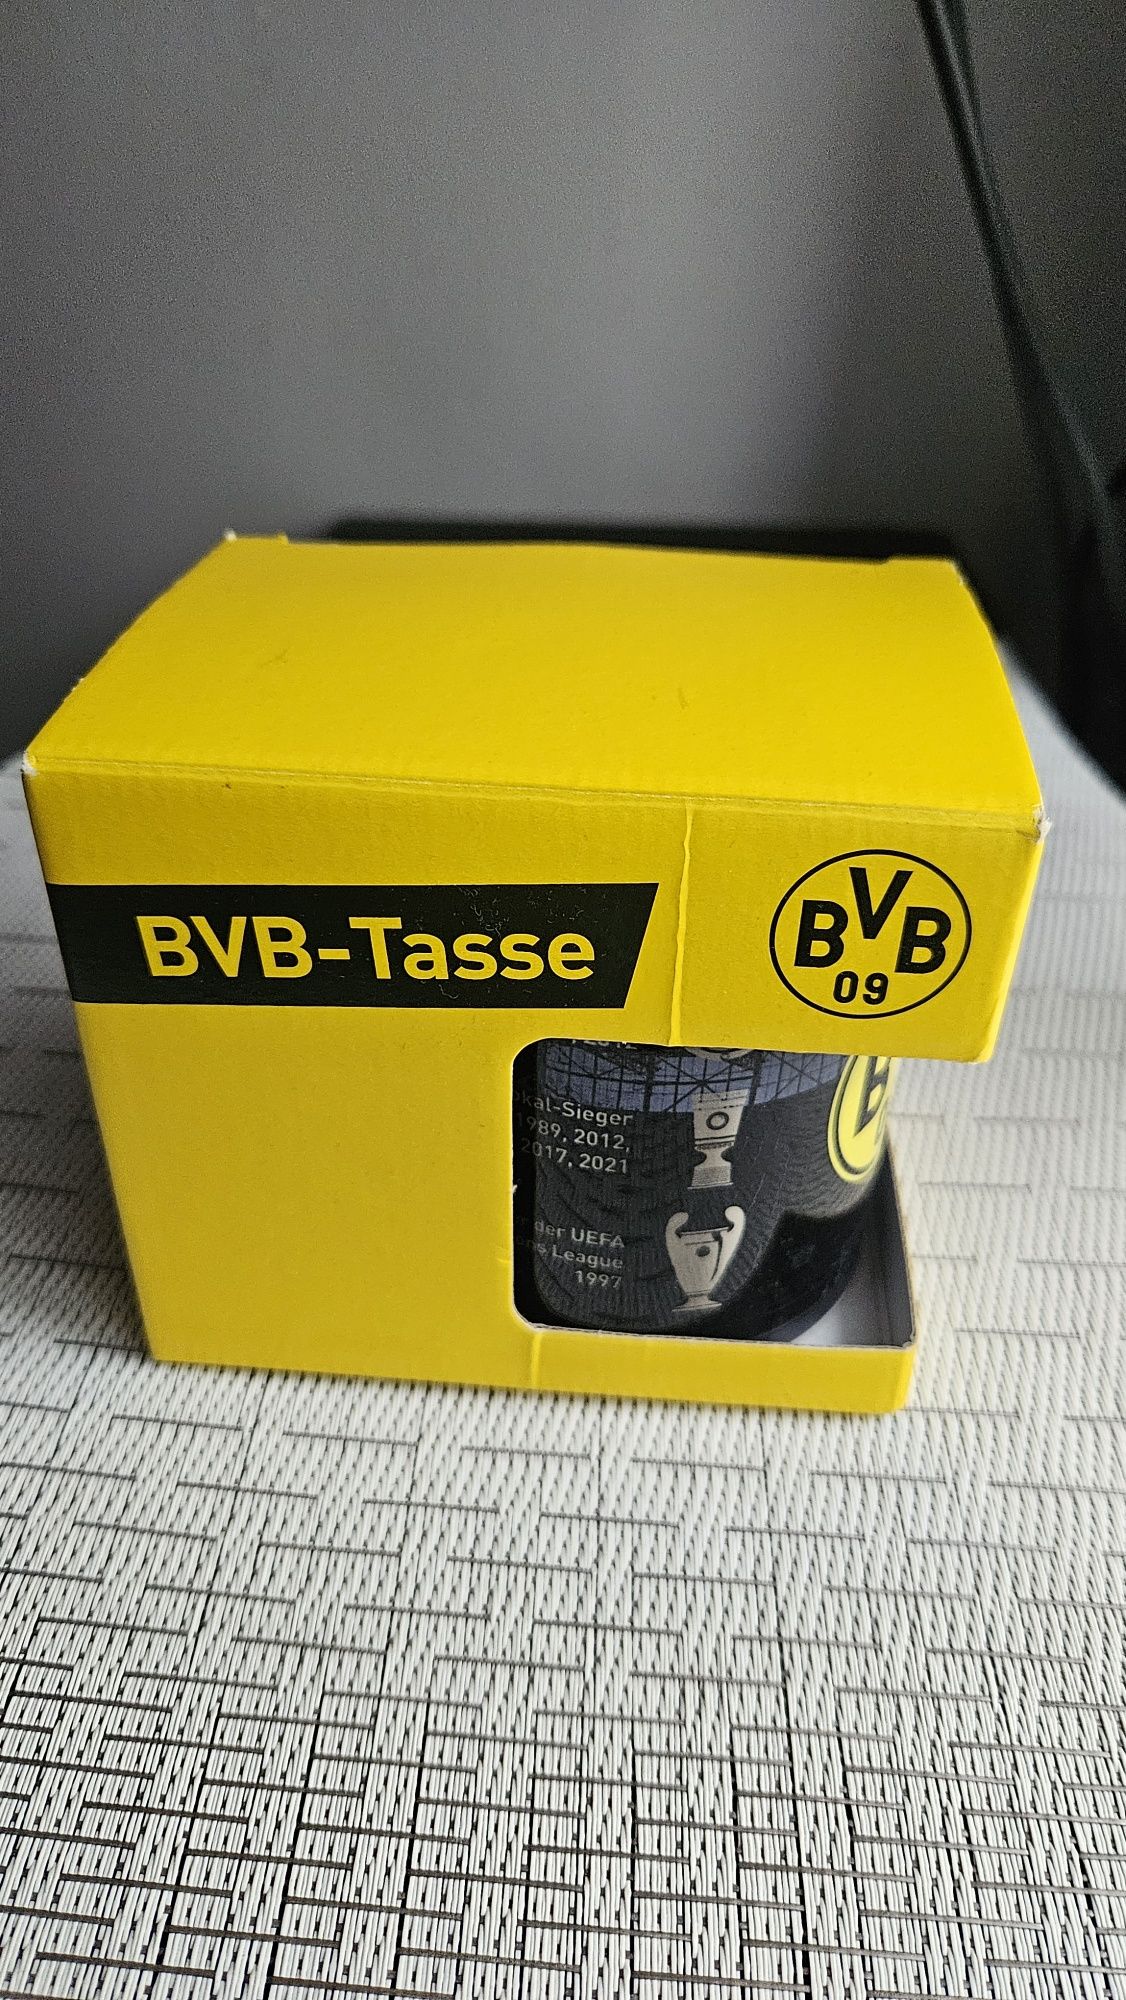 Kubek Borussia Dortmund